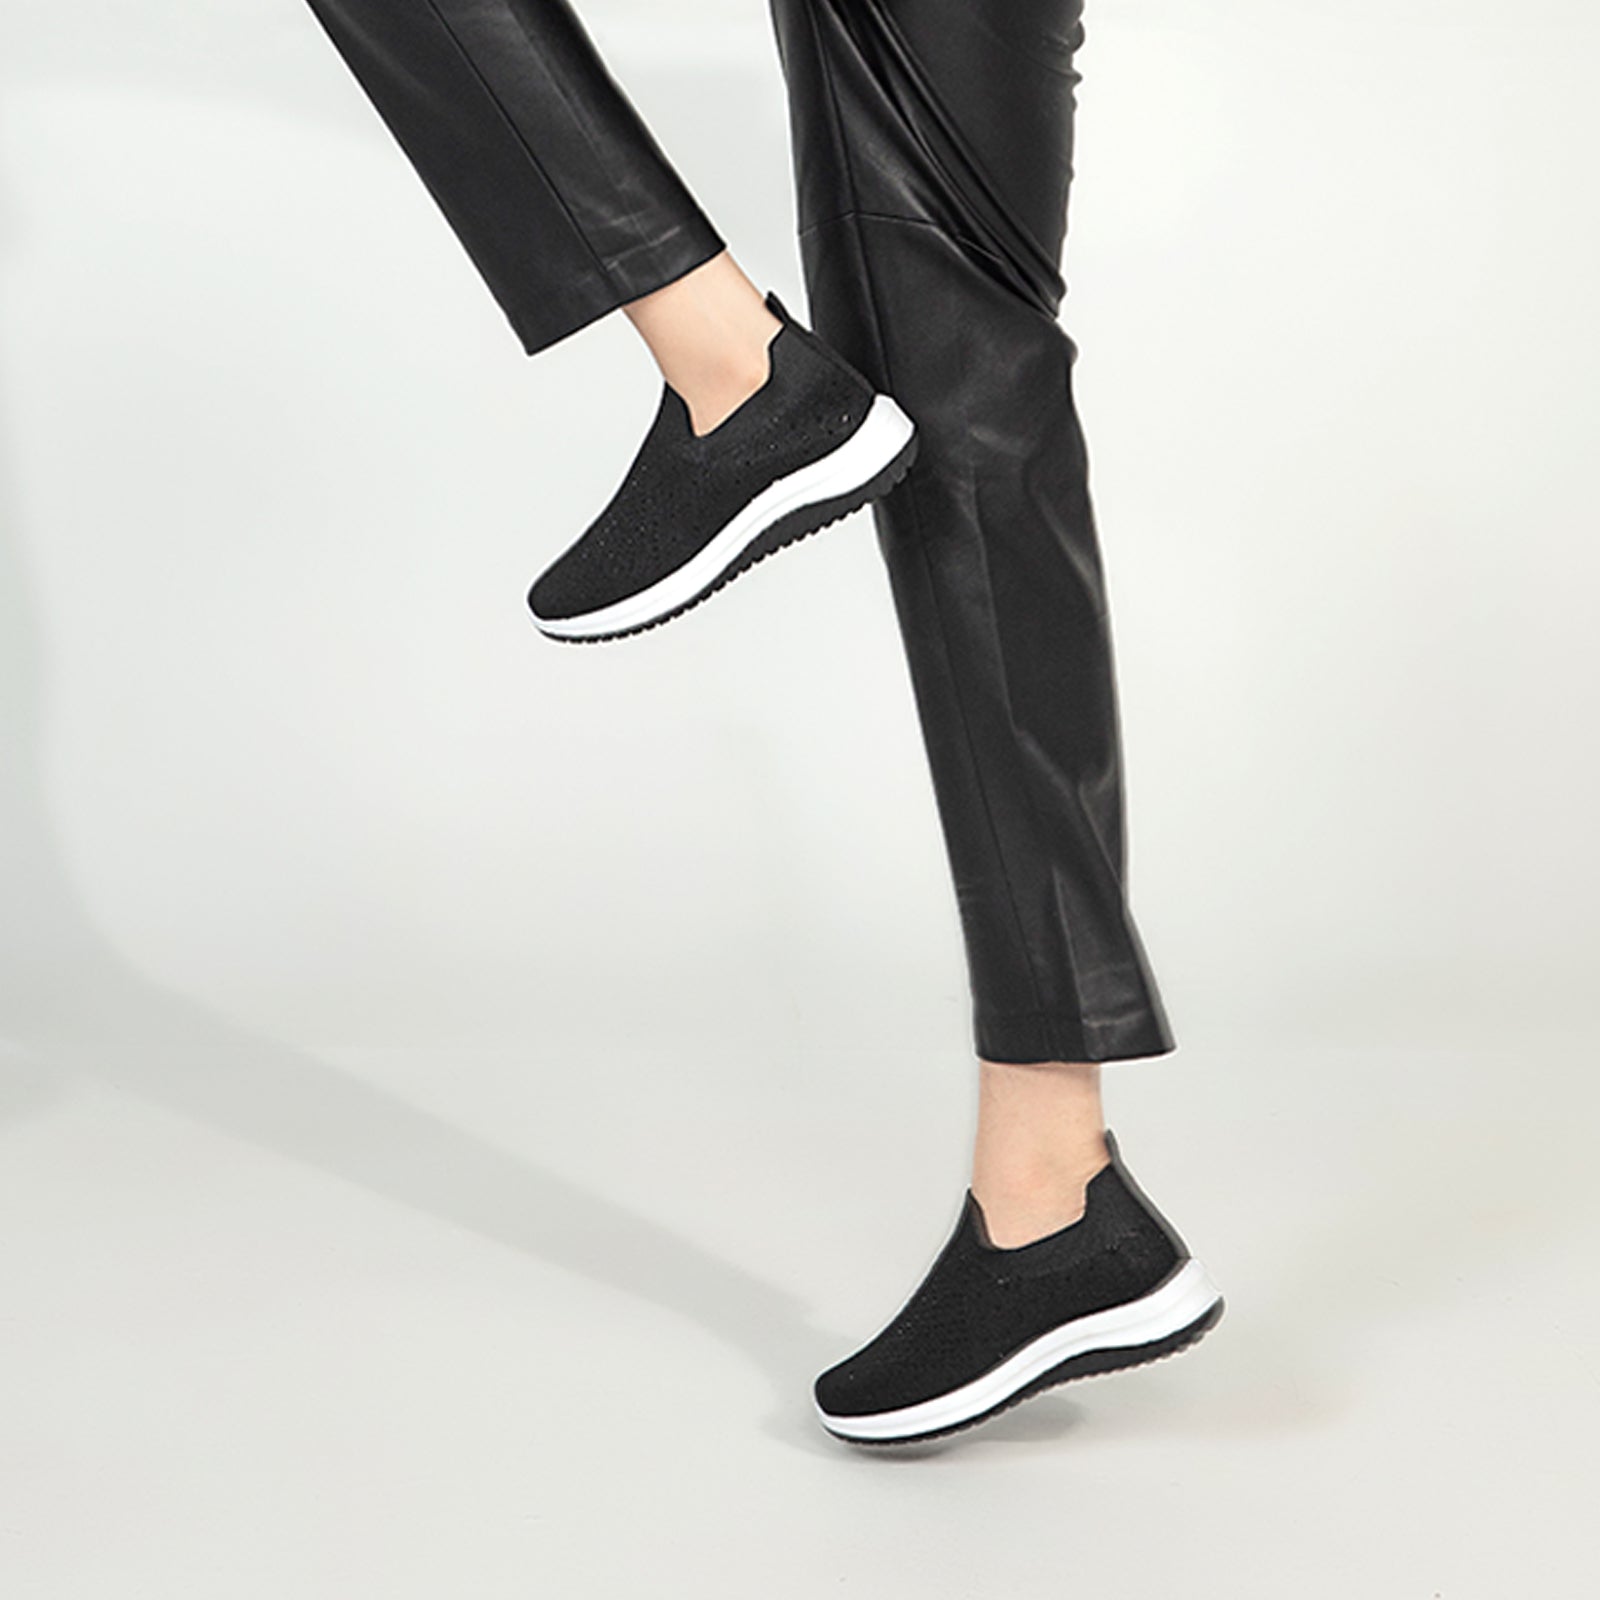 Nike Air Max Thea Black 599409-017 Ladies Sneaker Shoe US Women's 6 | eBay